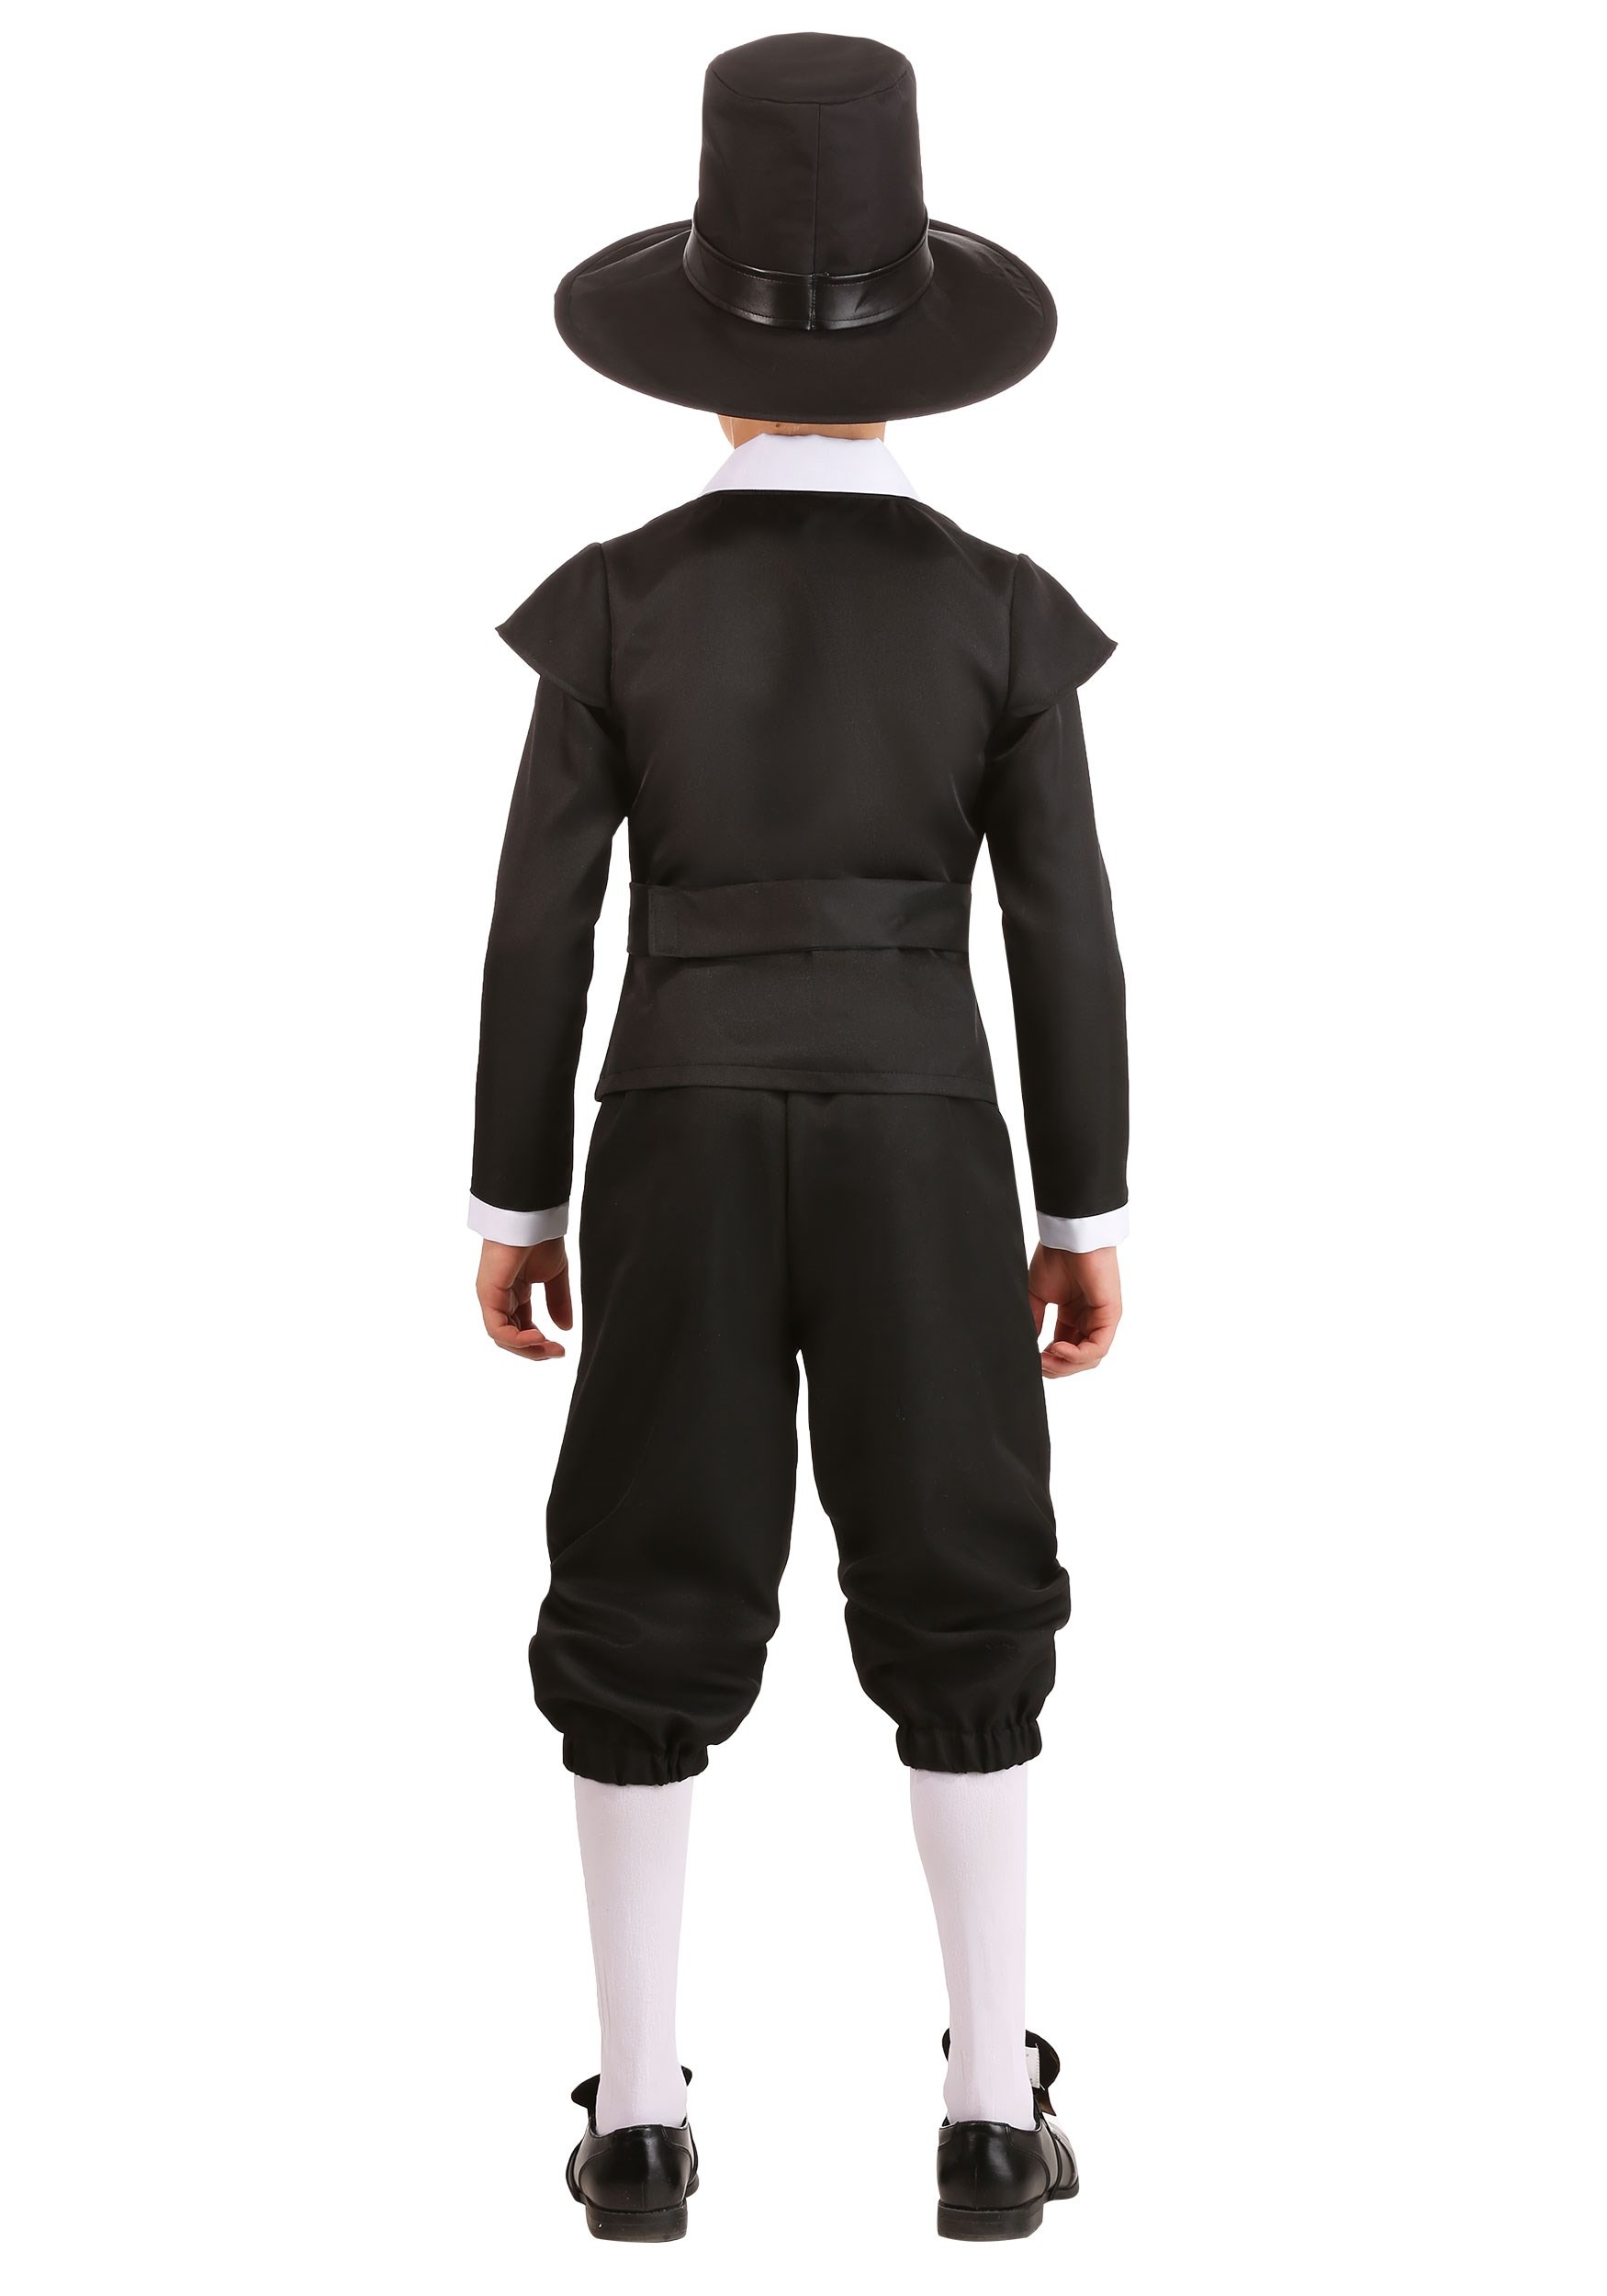 First Pilgrim Costume For Boy's